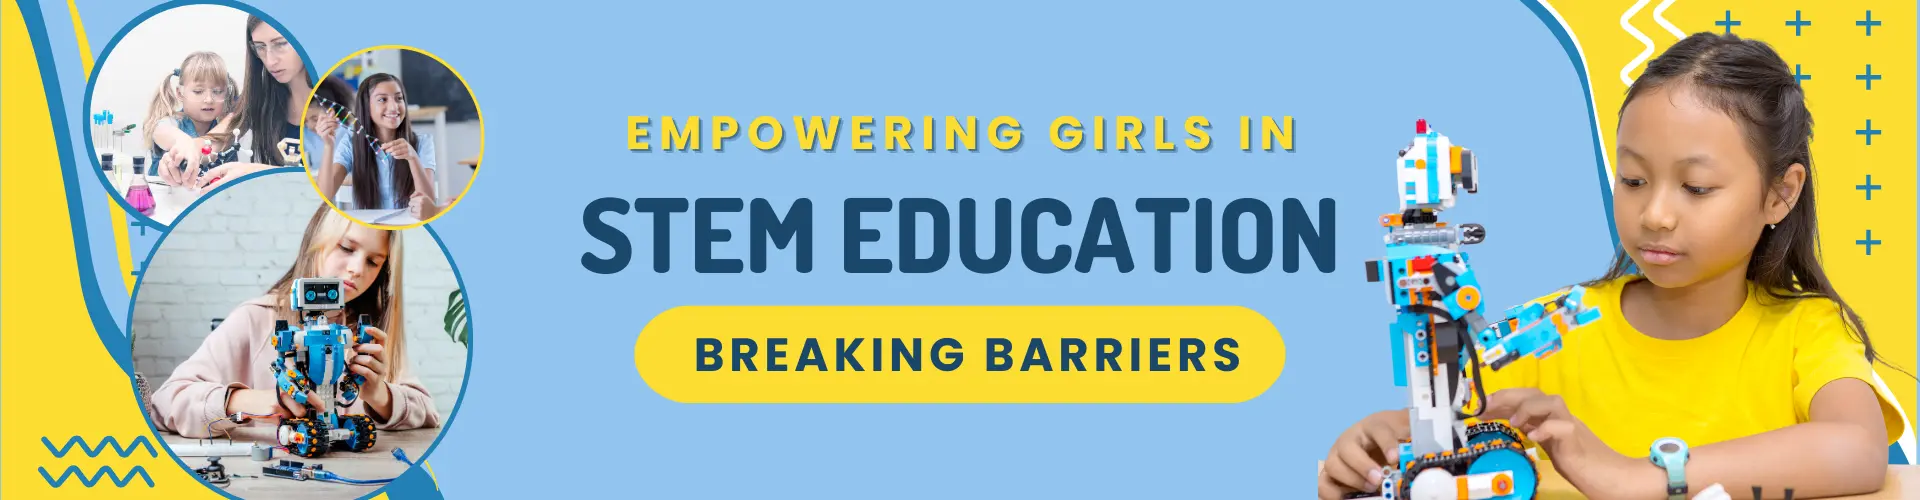 Empowering Girls In STEM Education Breaking Barriers 2